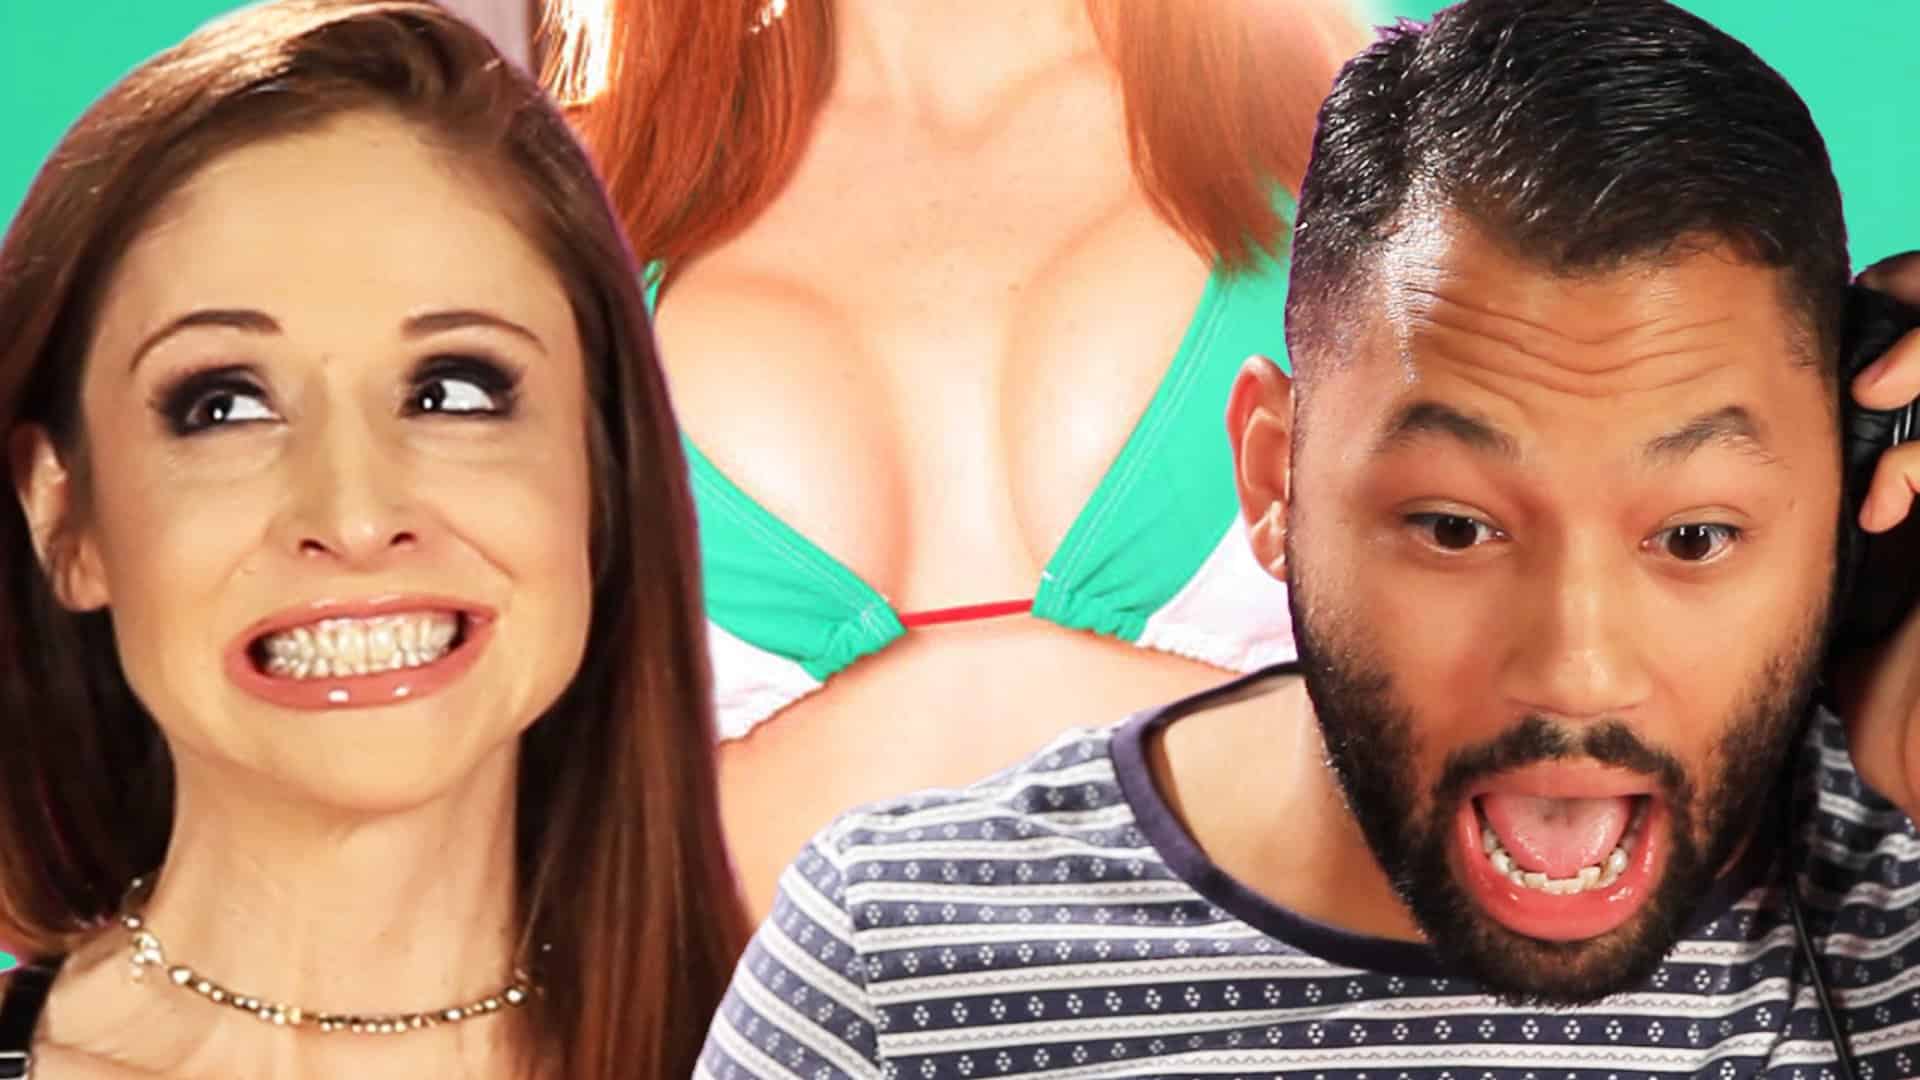 Watch Porn With Porn Stars